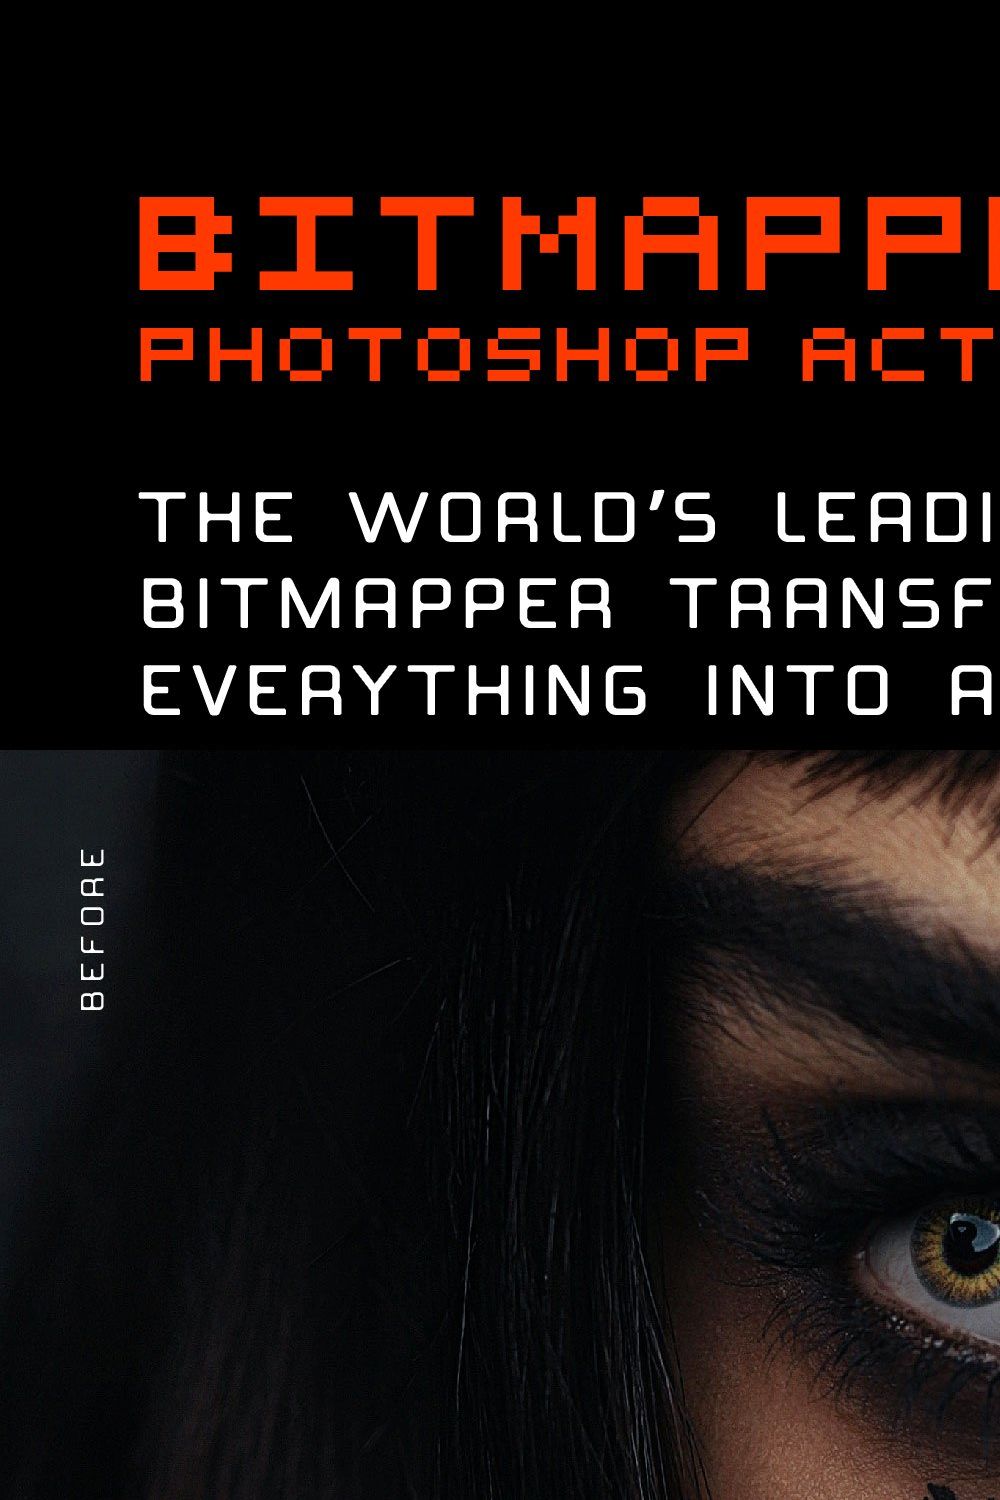 Bitmapper - Convert Image to Bitmap pinterest preview image.